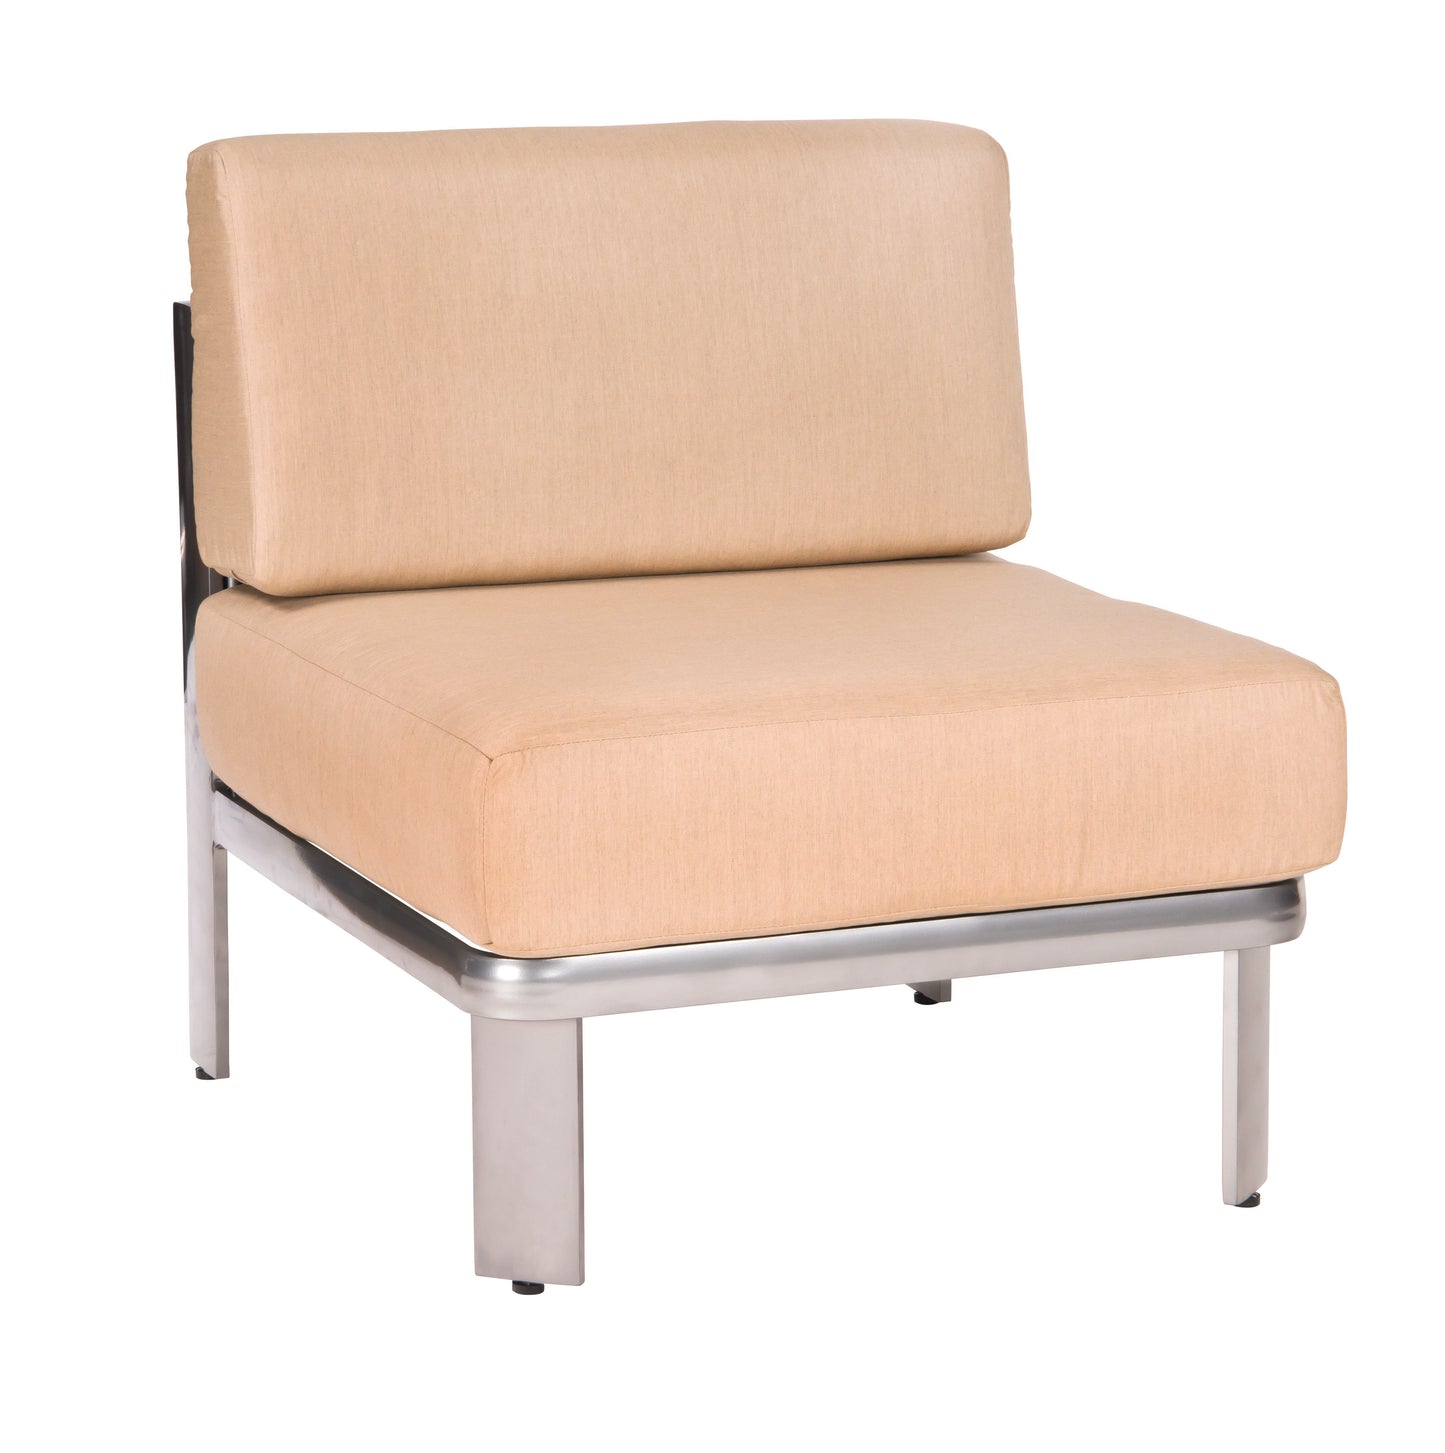 Woodard Metropolis Cushion Armless Sectional Unit 3G0462